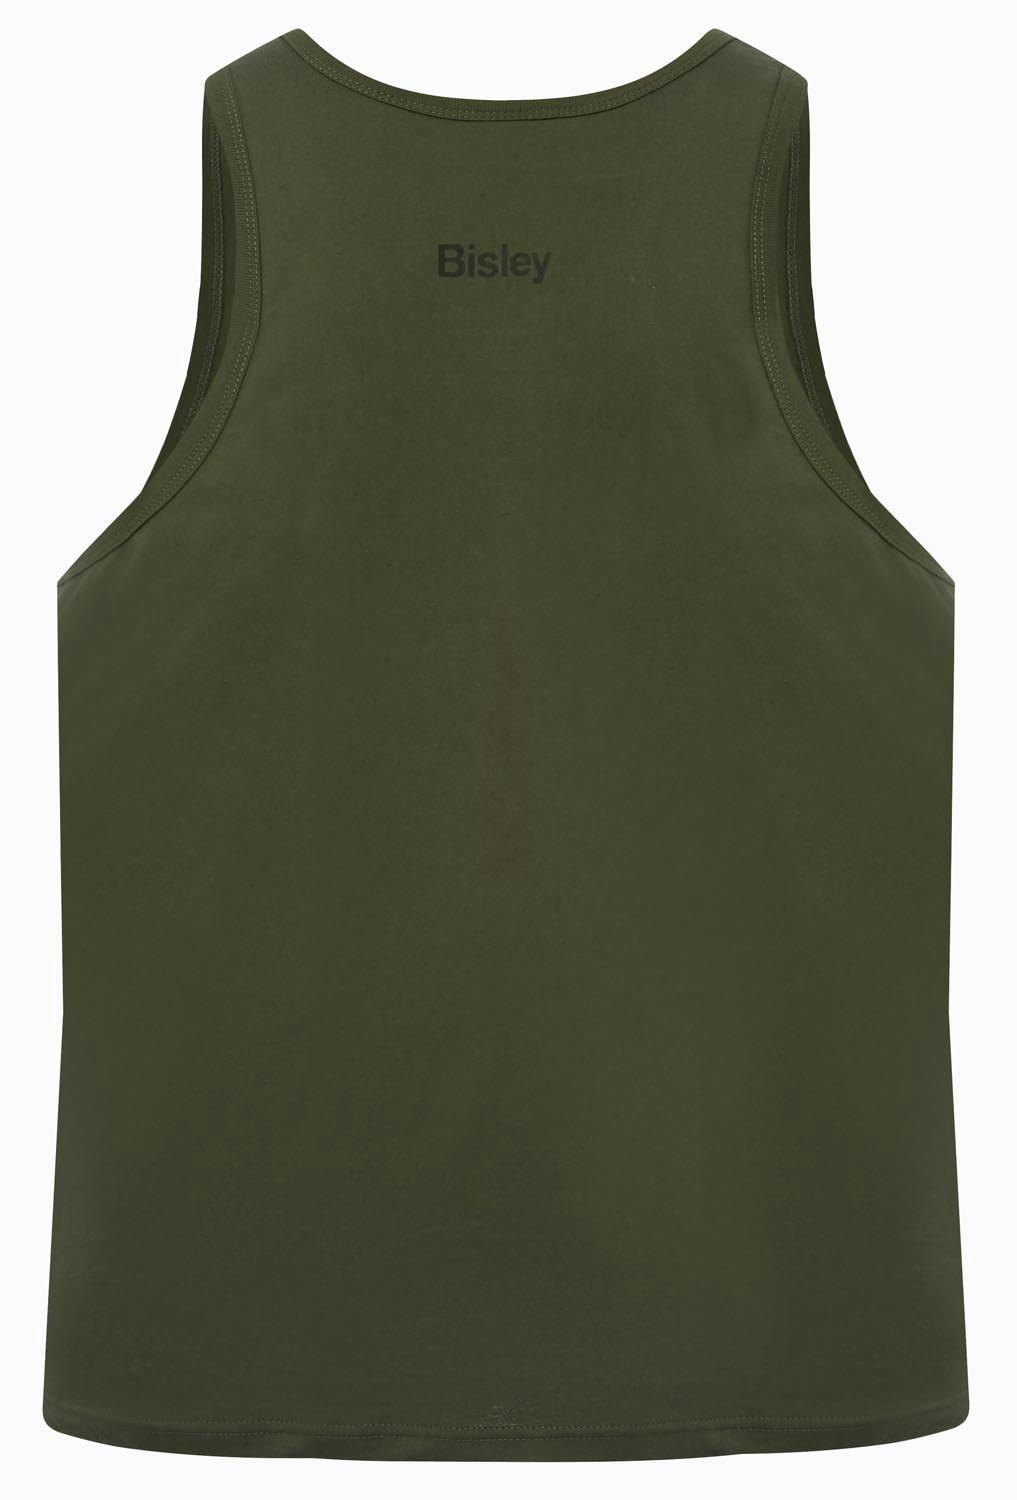 Bisley Cotton Logo Singlet